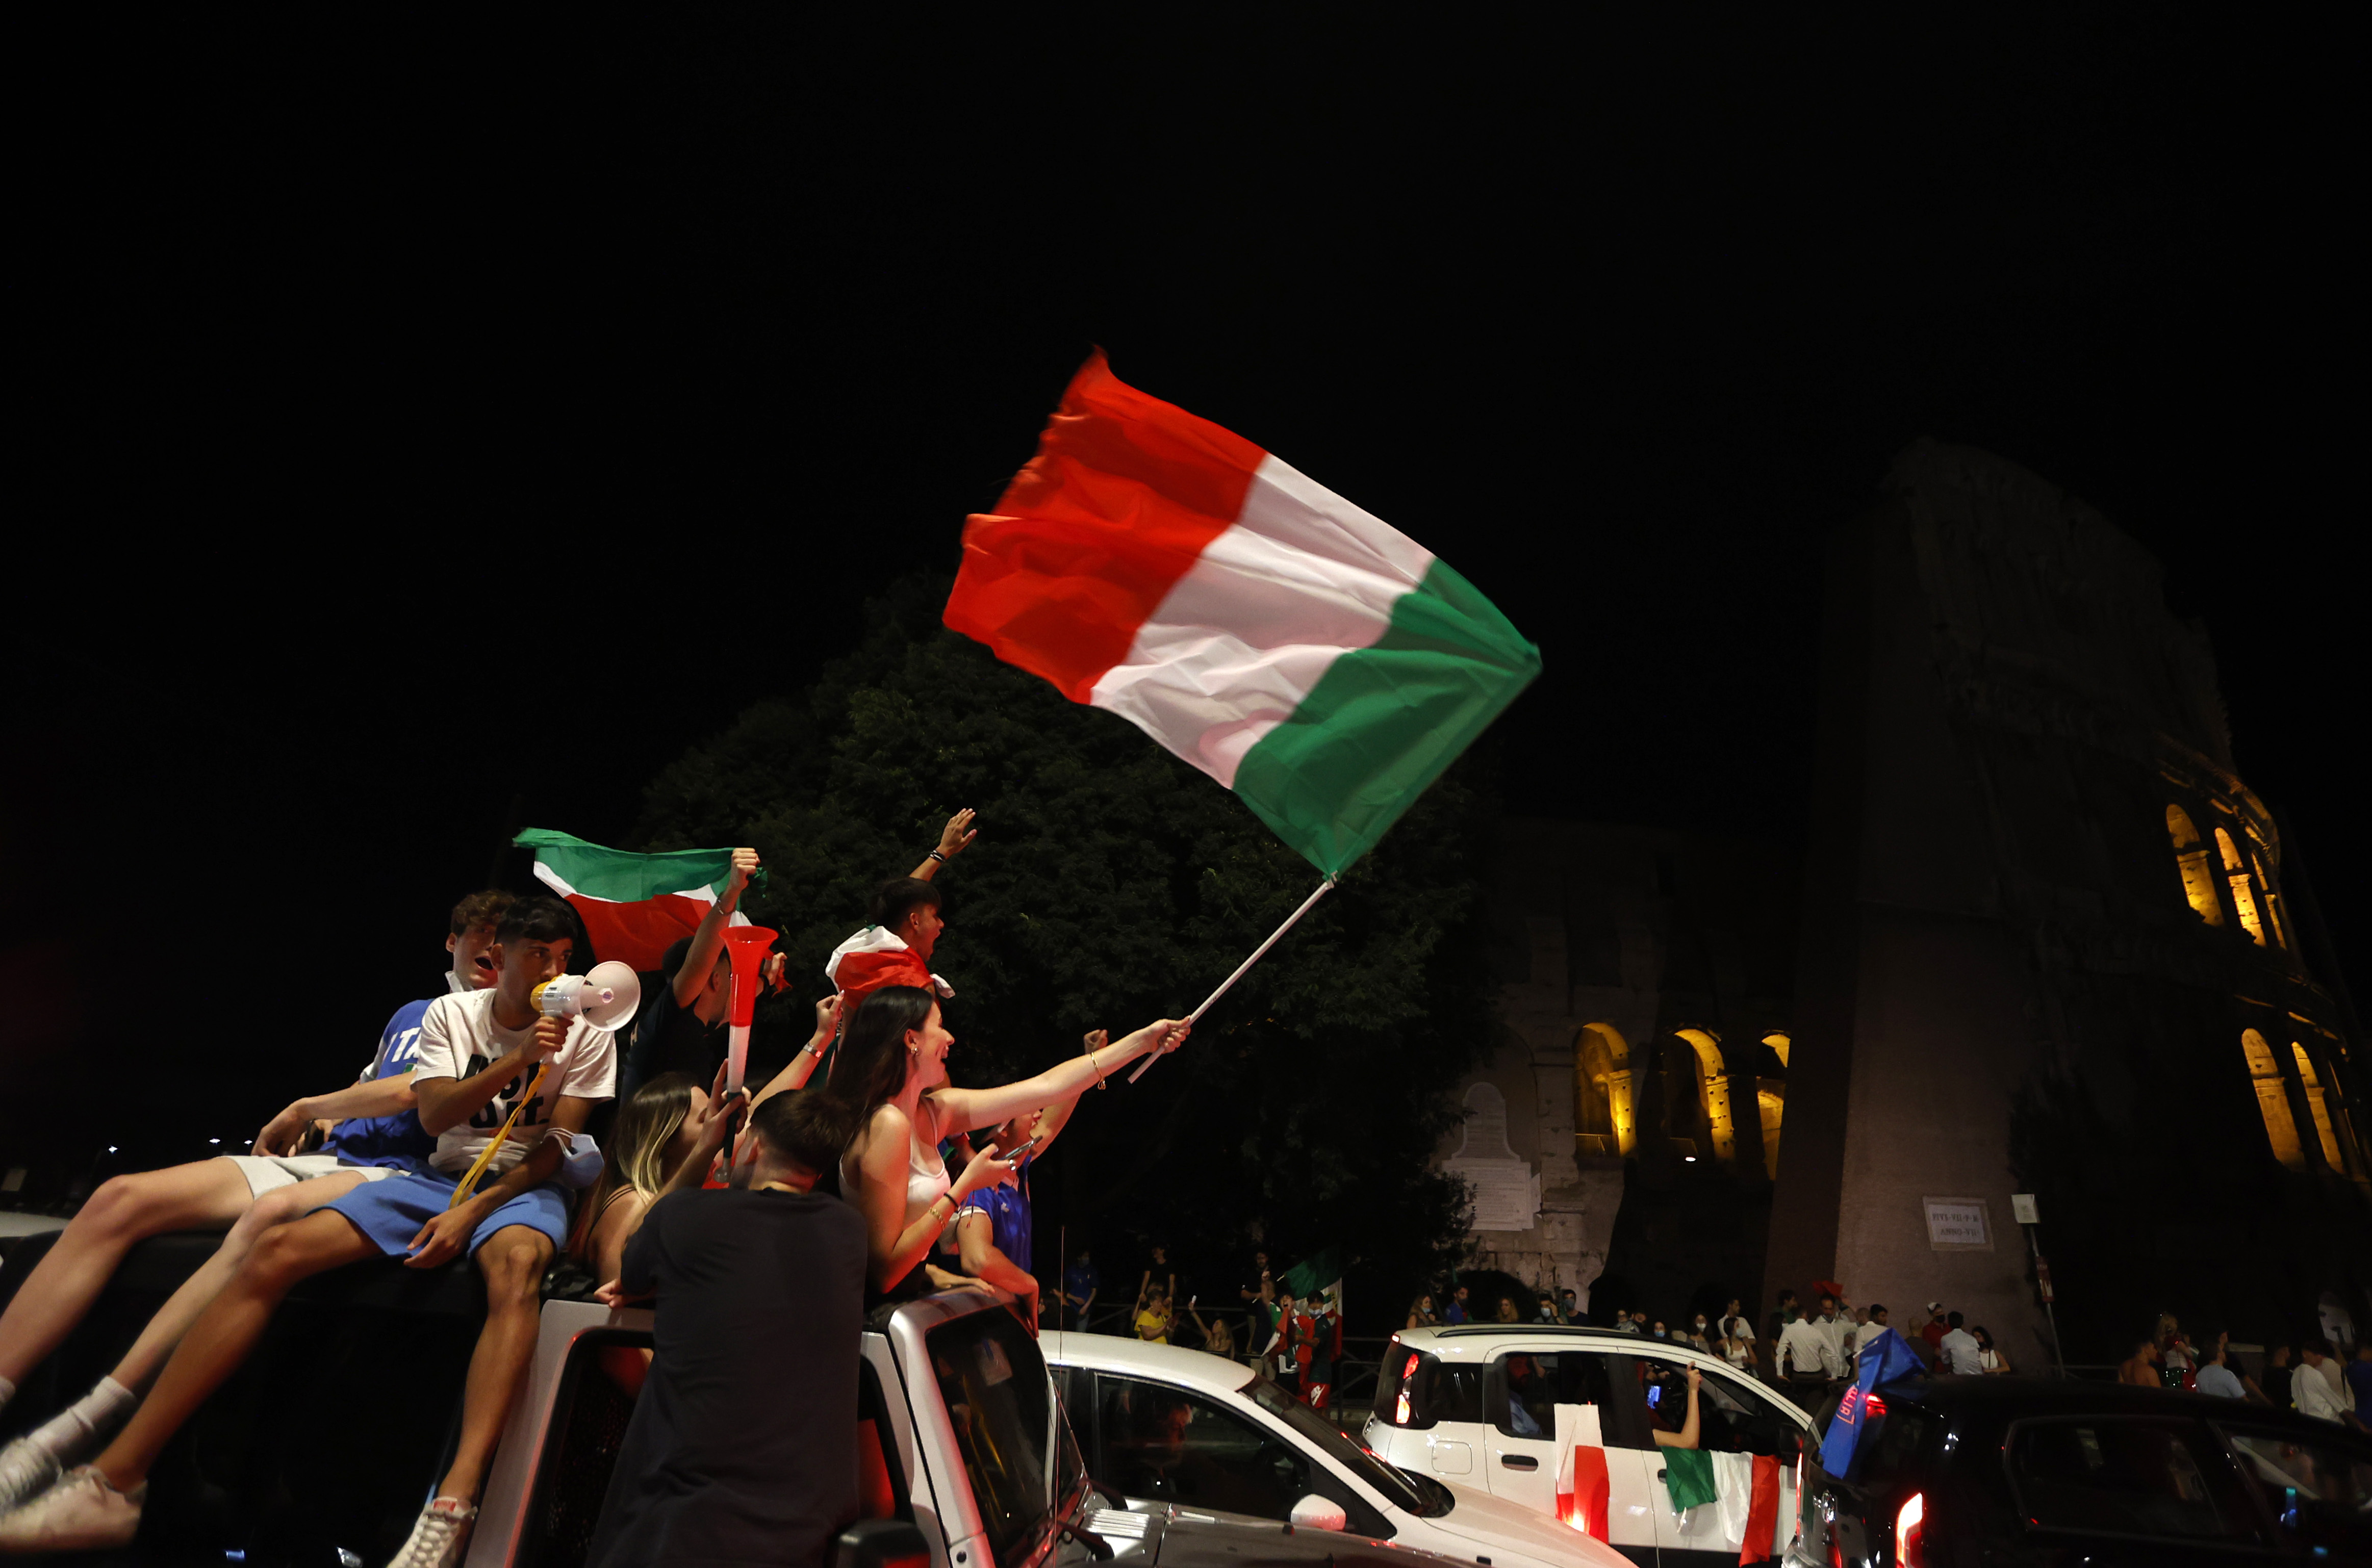 Italians celebrate the EURO 2020 trophy